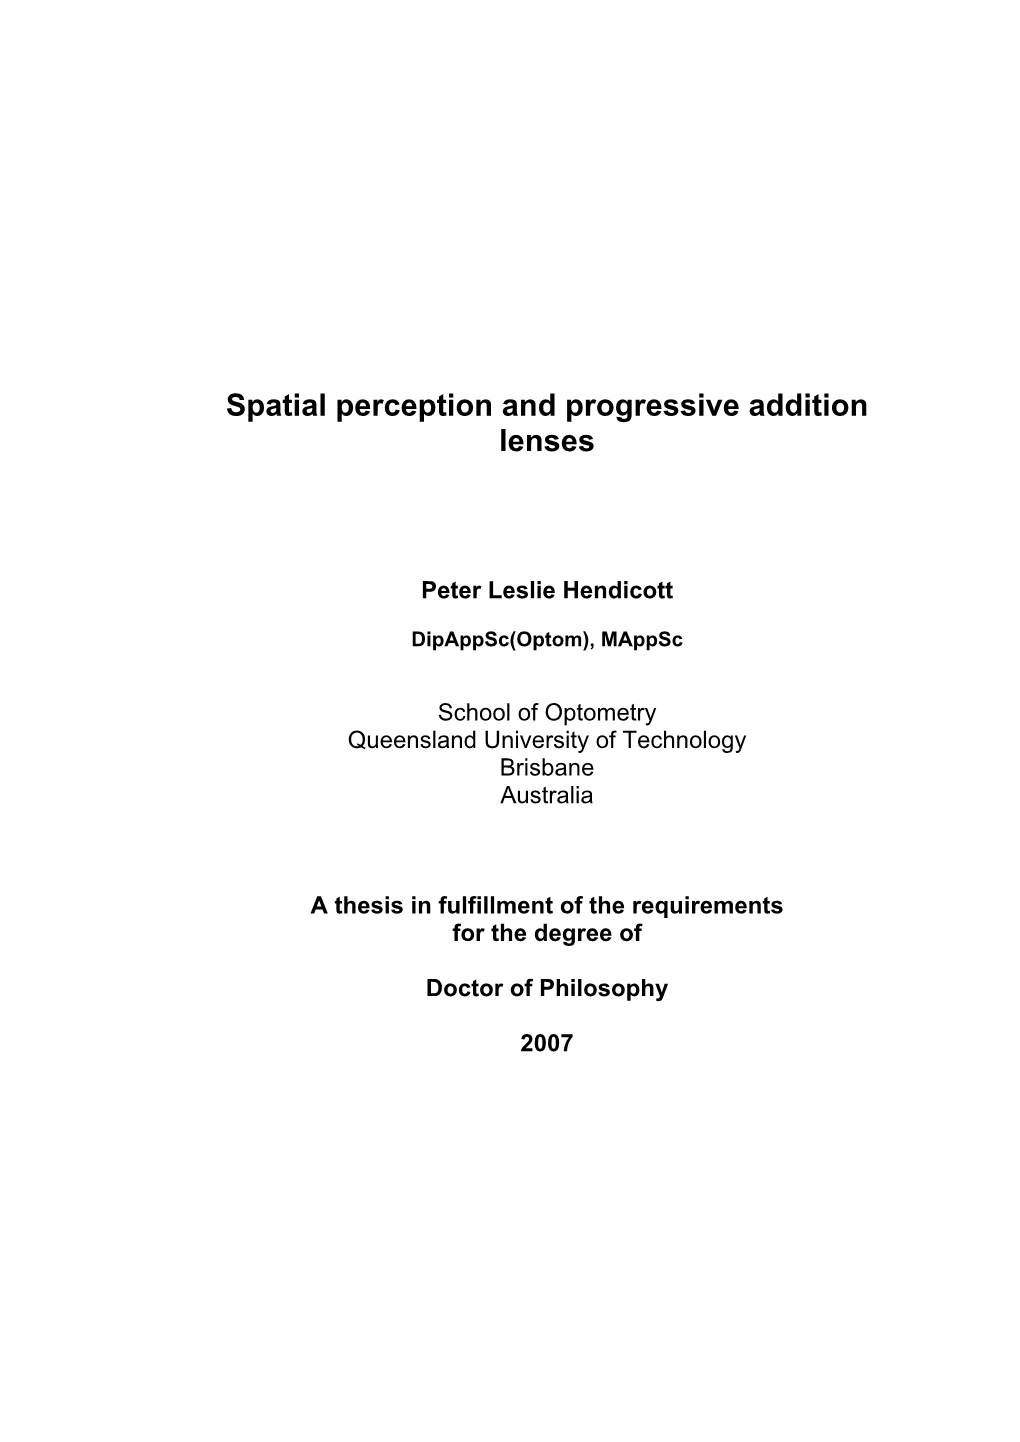 Spatial Perception and Progressive Addition Lenses